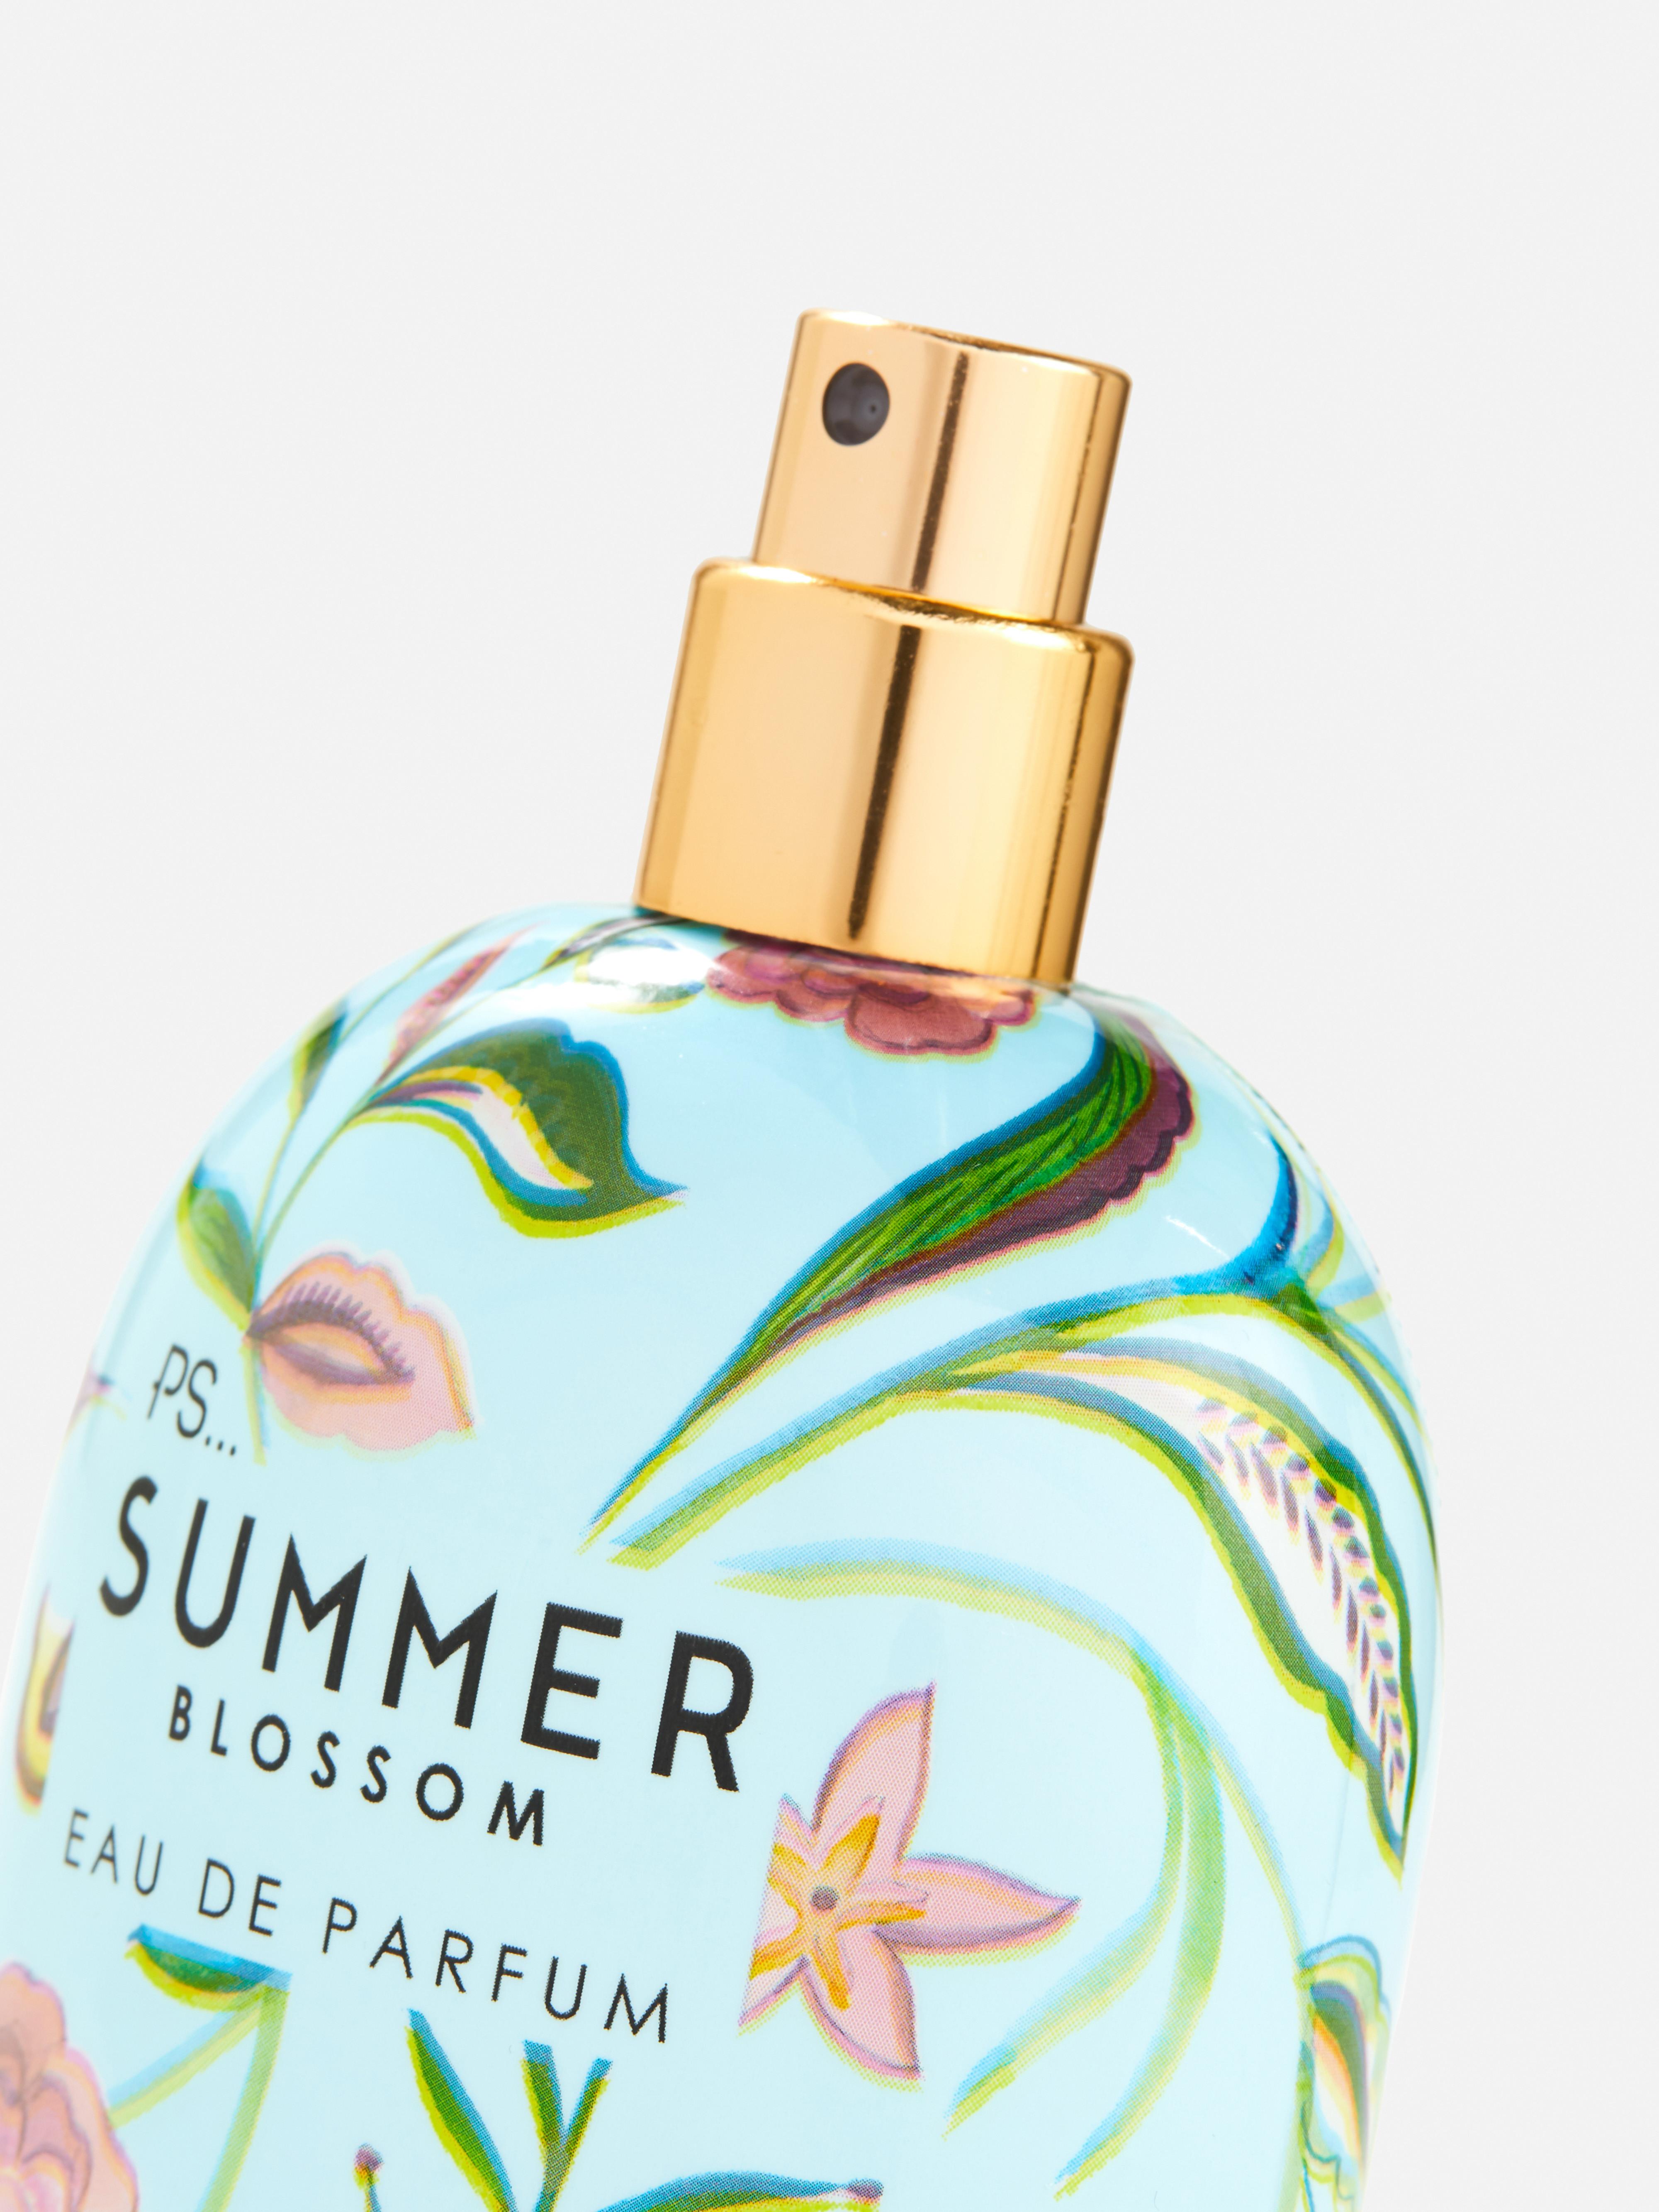 PS Summer Blossom Eau De Parfum